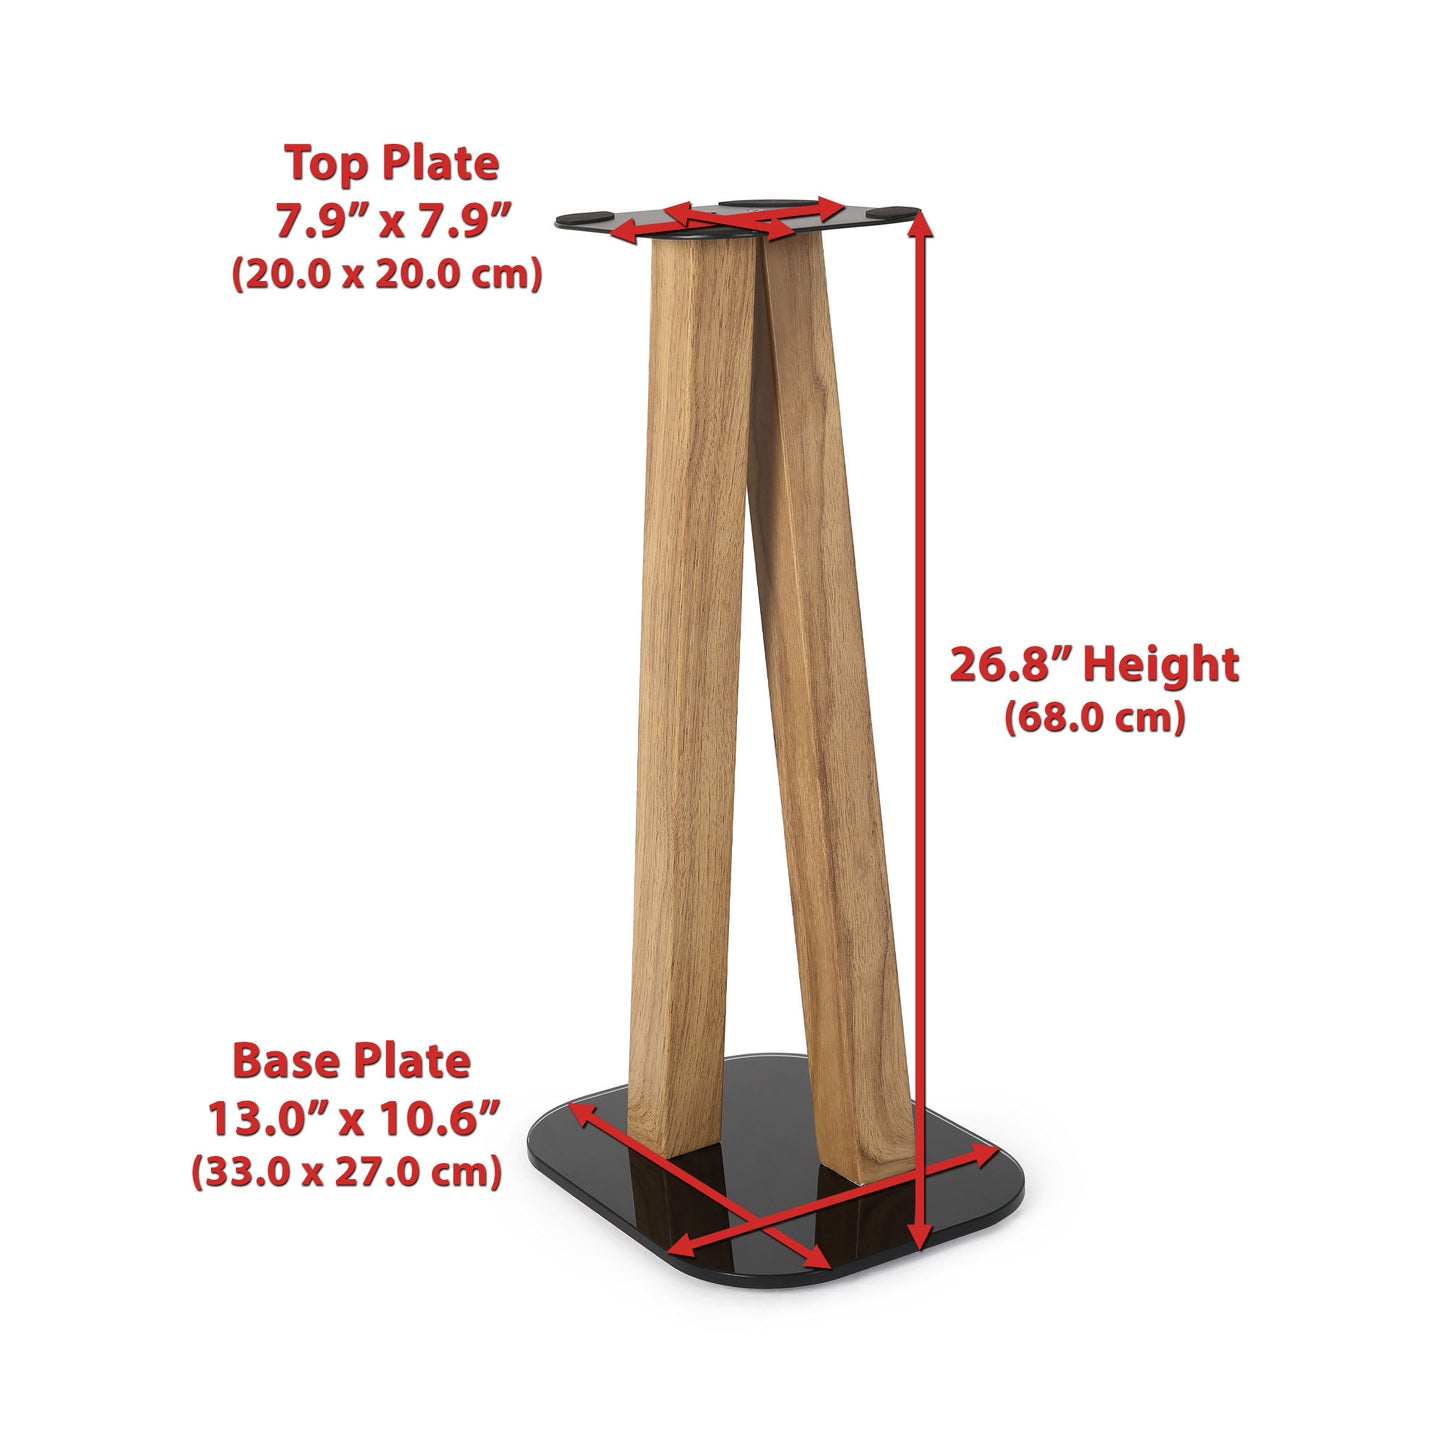 EXIMUS One Pair Fixed Height Universal Speaker Floor Stands - Walnut (600 Series)